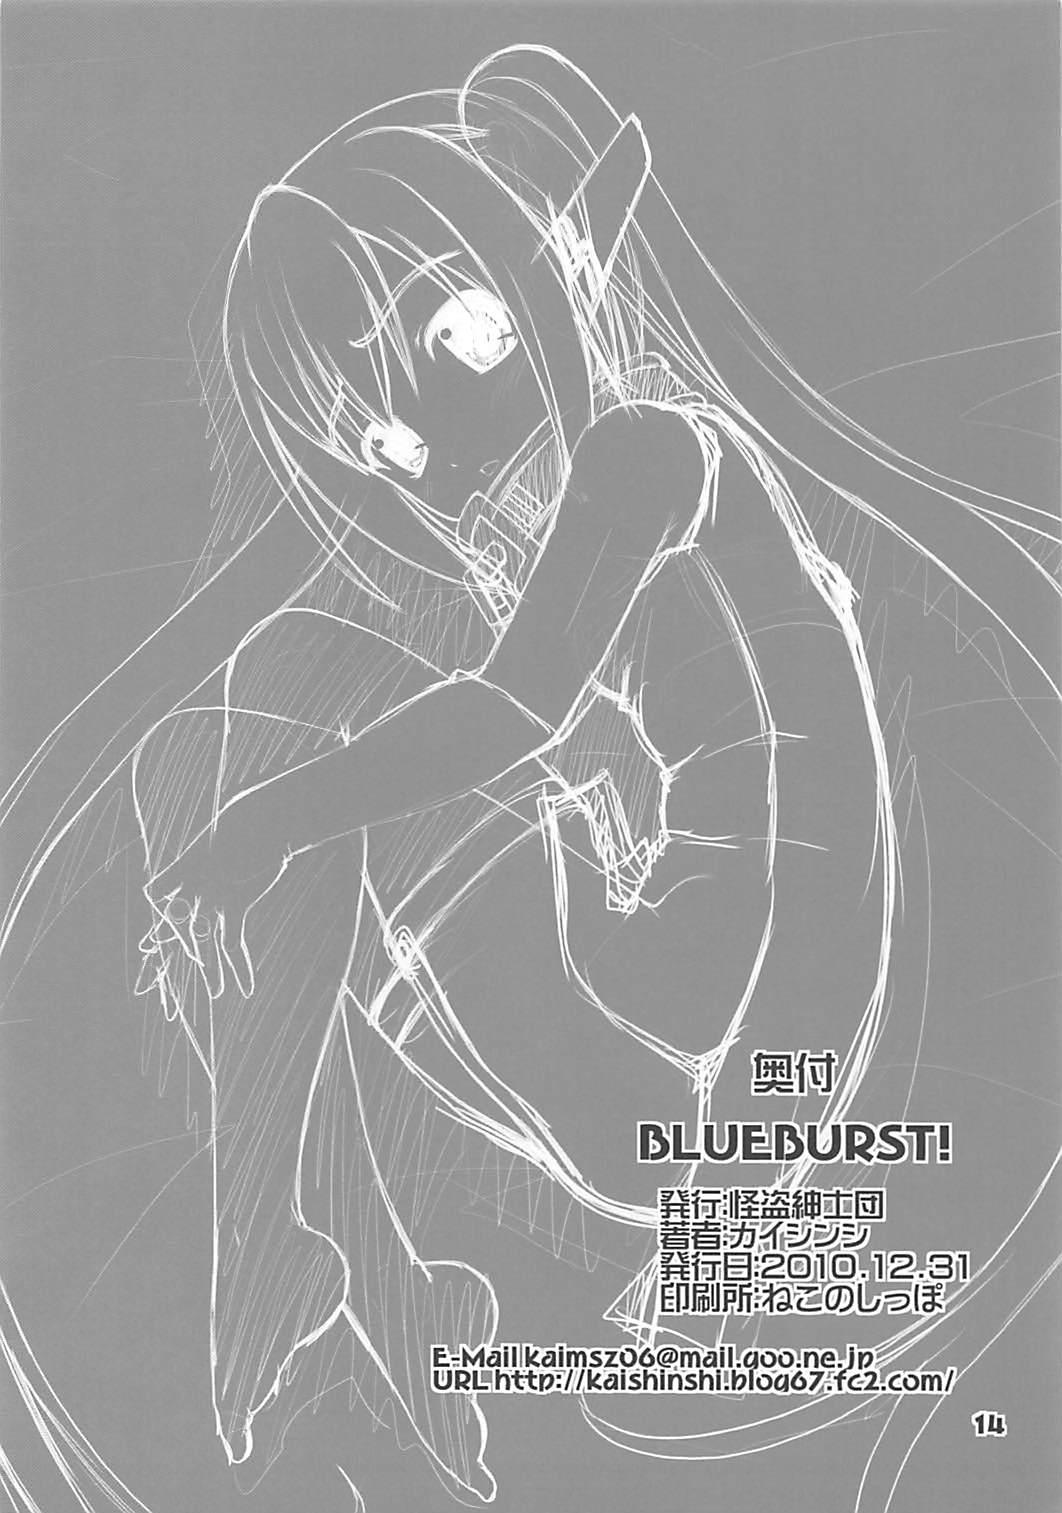 Class Room BLUE BURST! - Sora no otoshimono  - Page 13